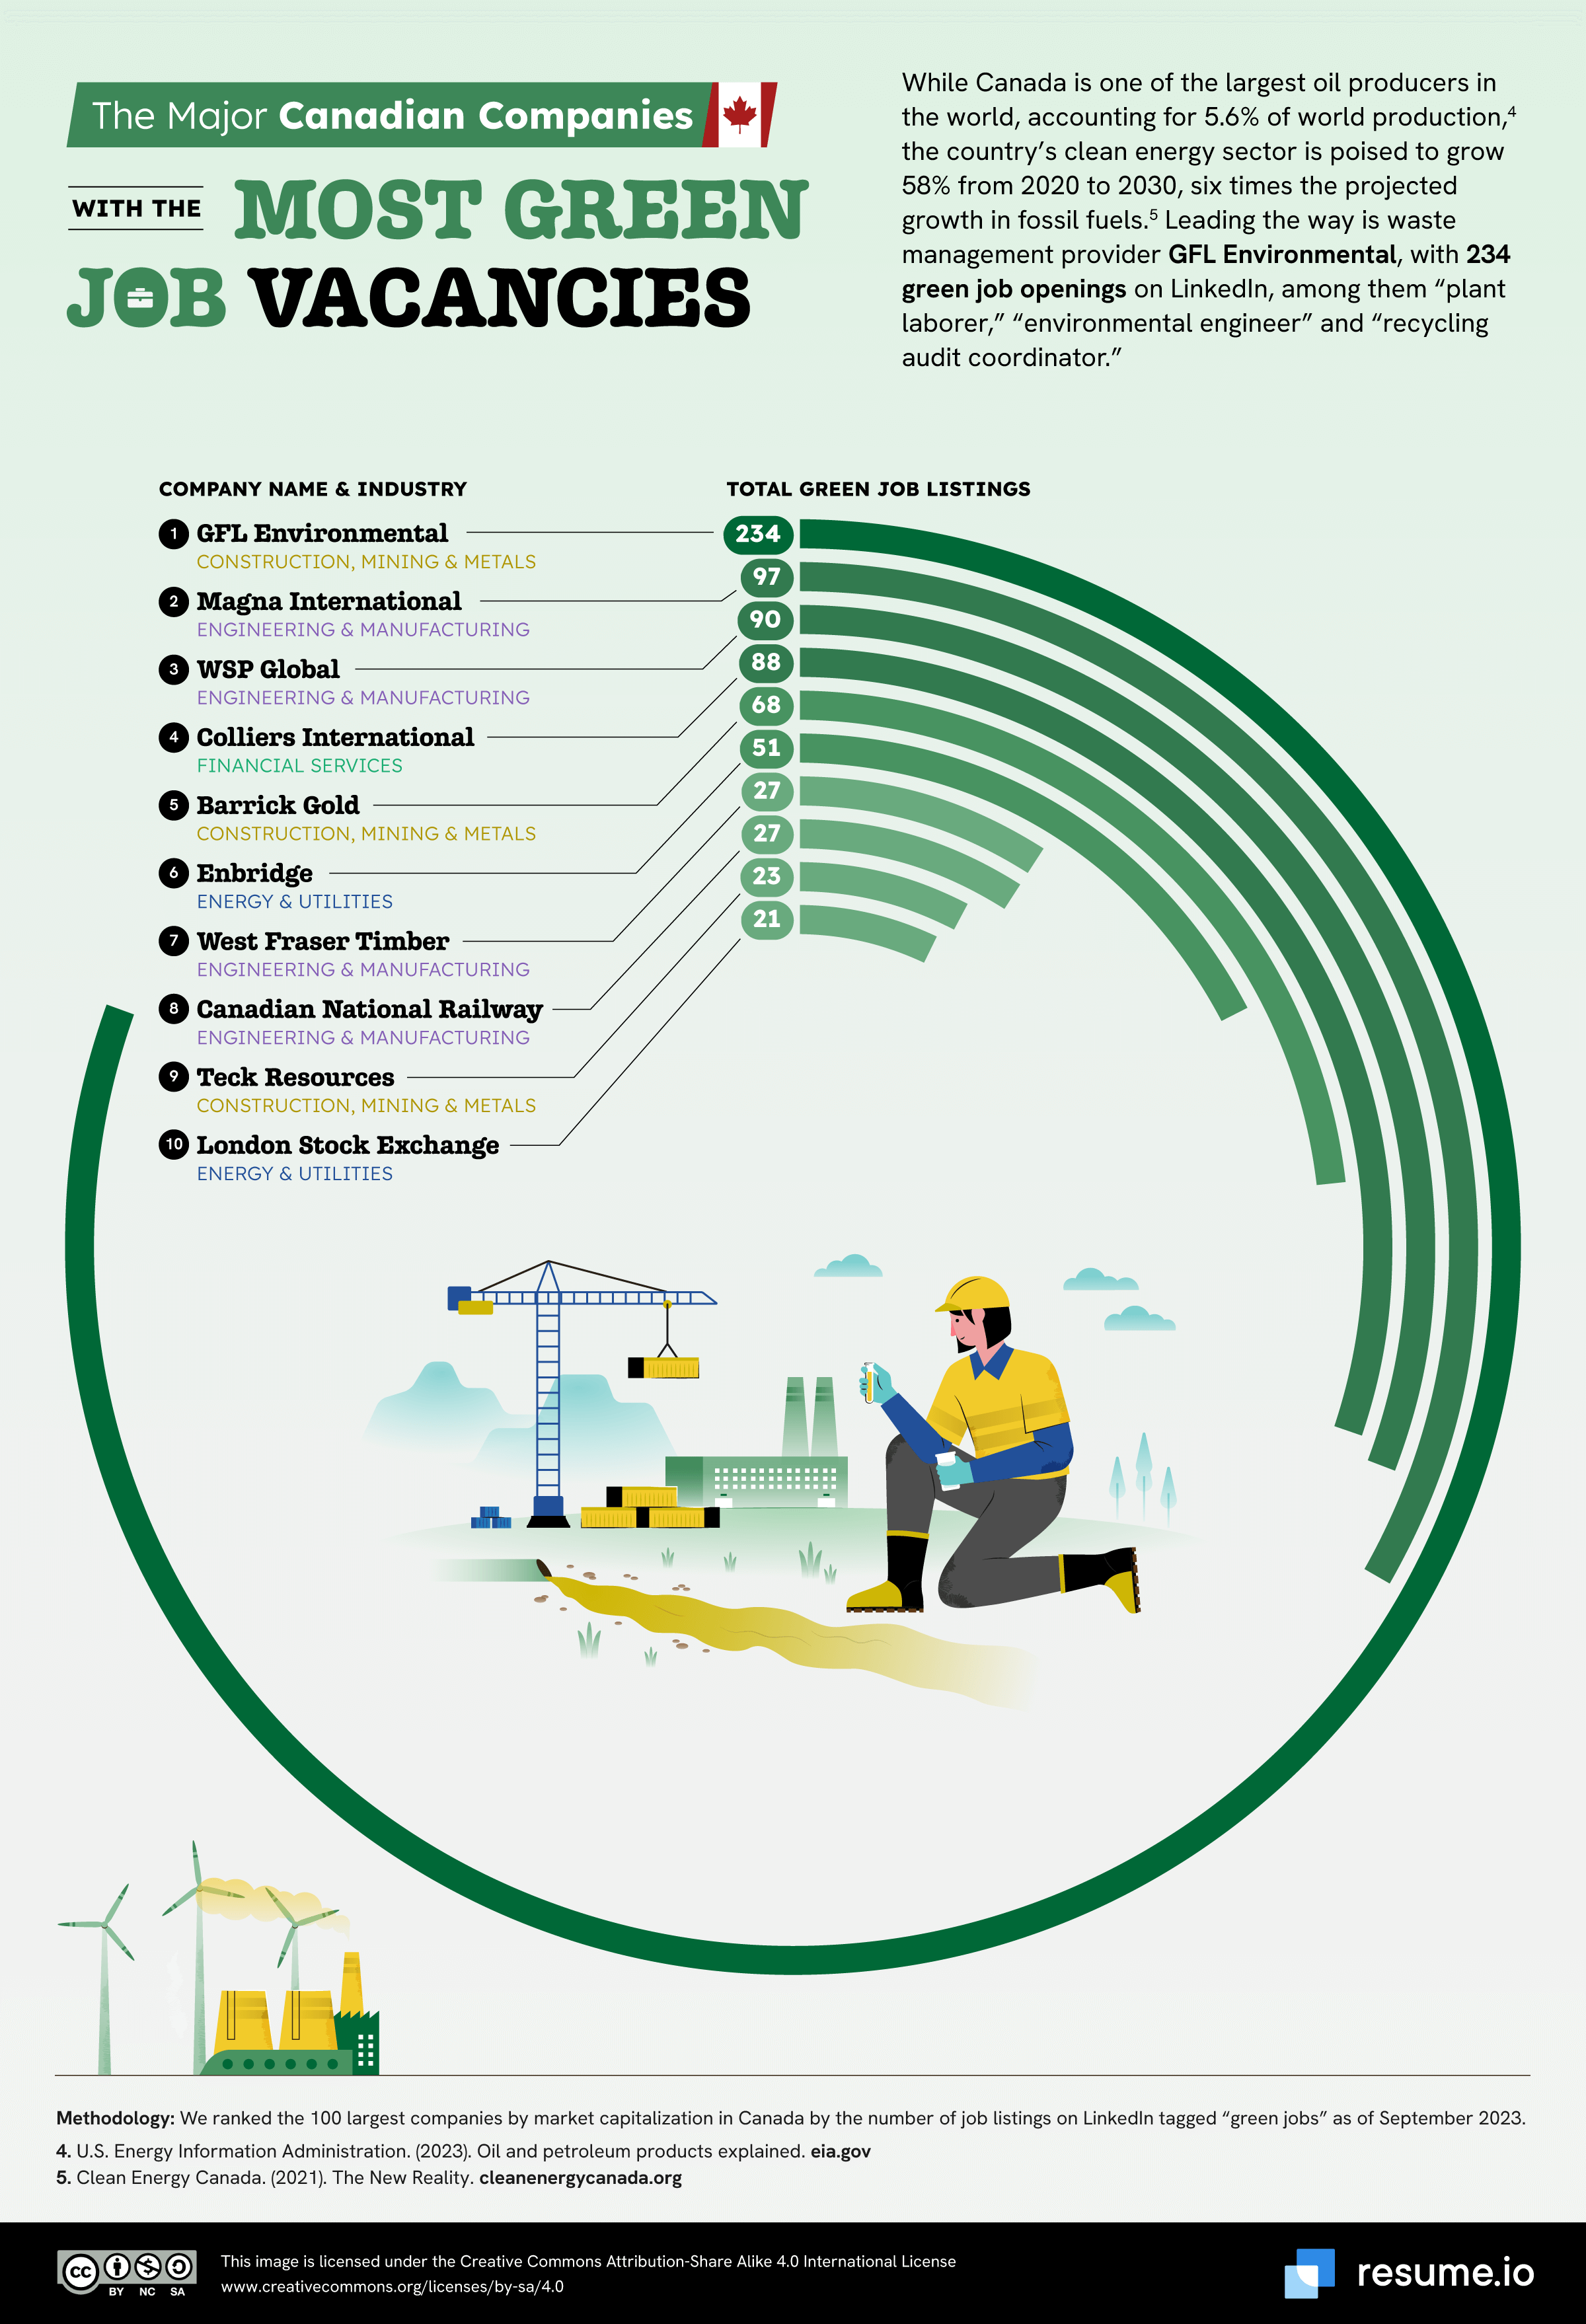 Canadian companies with most green job vacancies